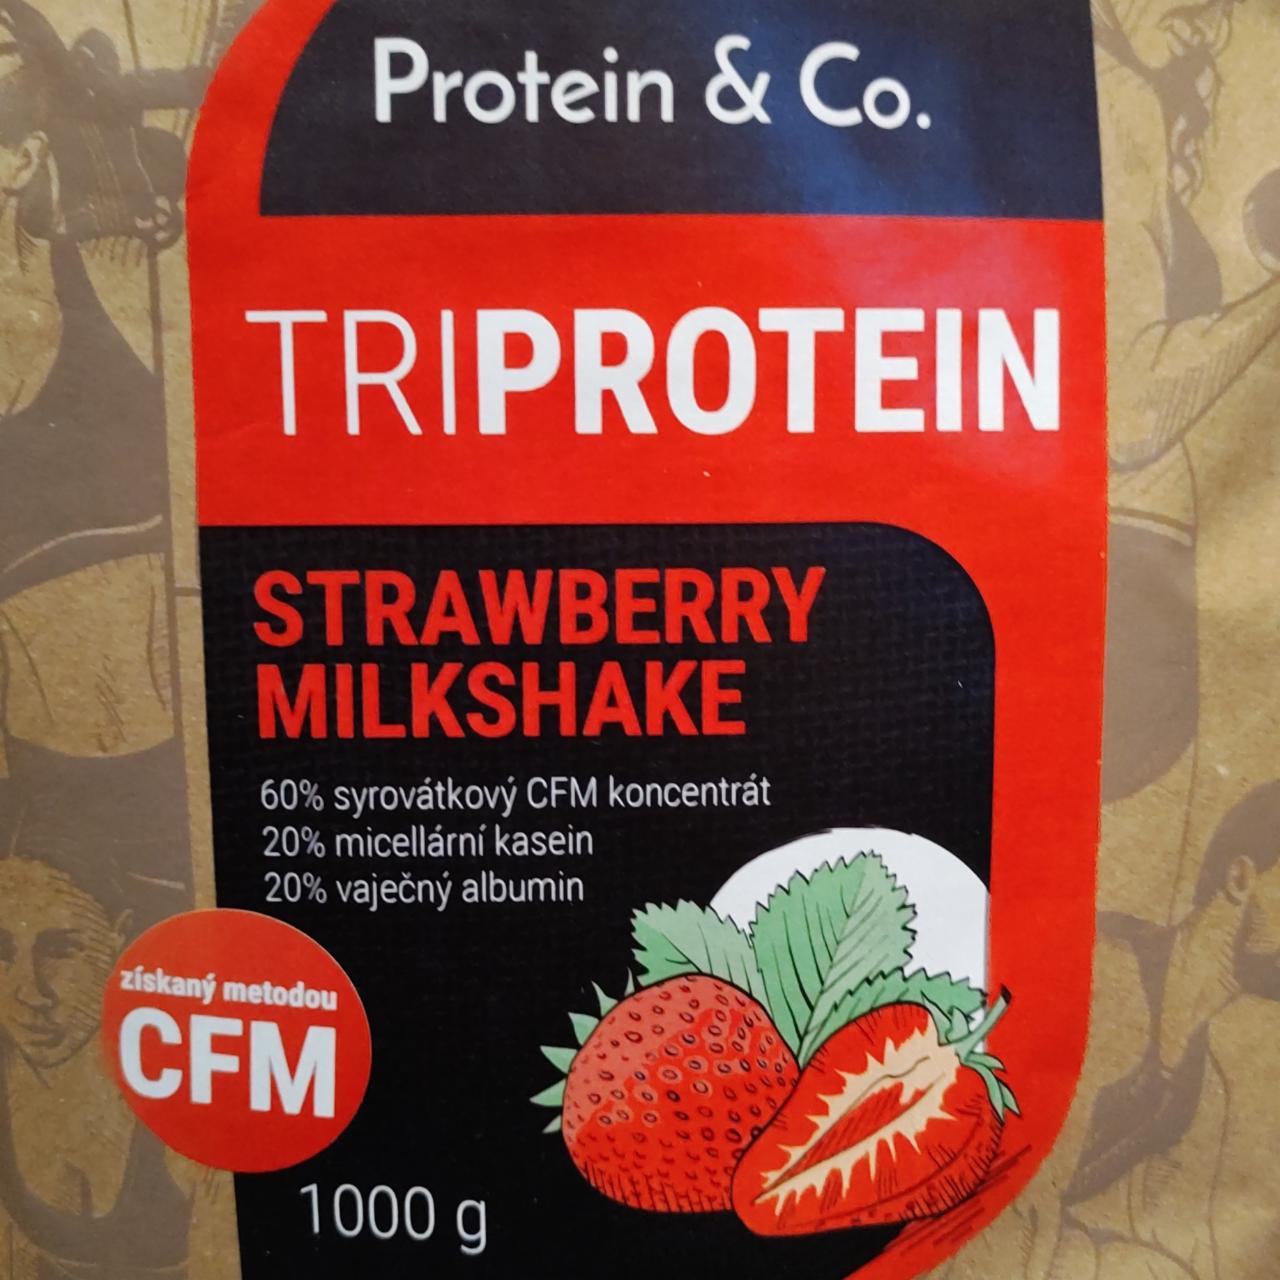 Fotografie - Triprotein Strawberry Milkshake Protein & co.